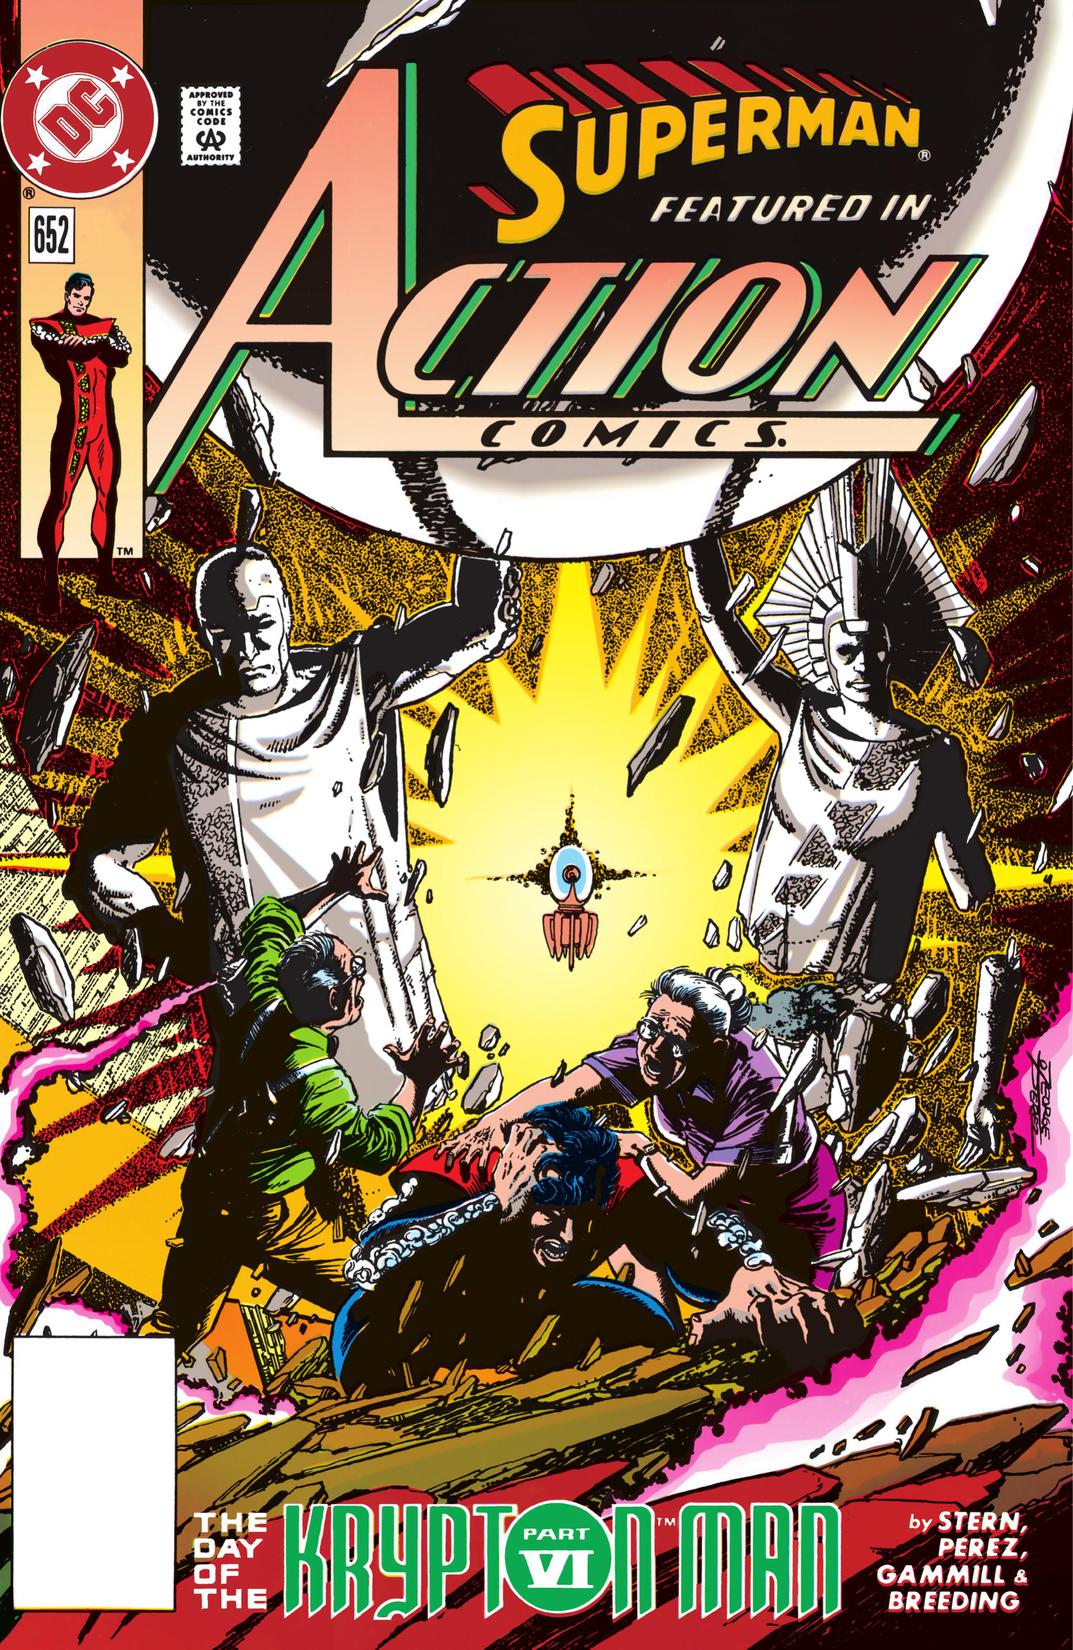 Action Comics (1938-2011) #652 preview images